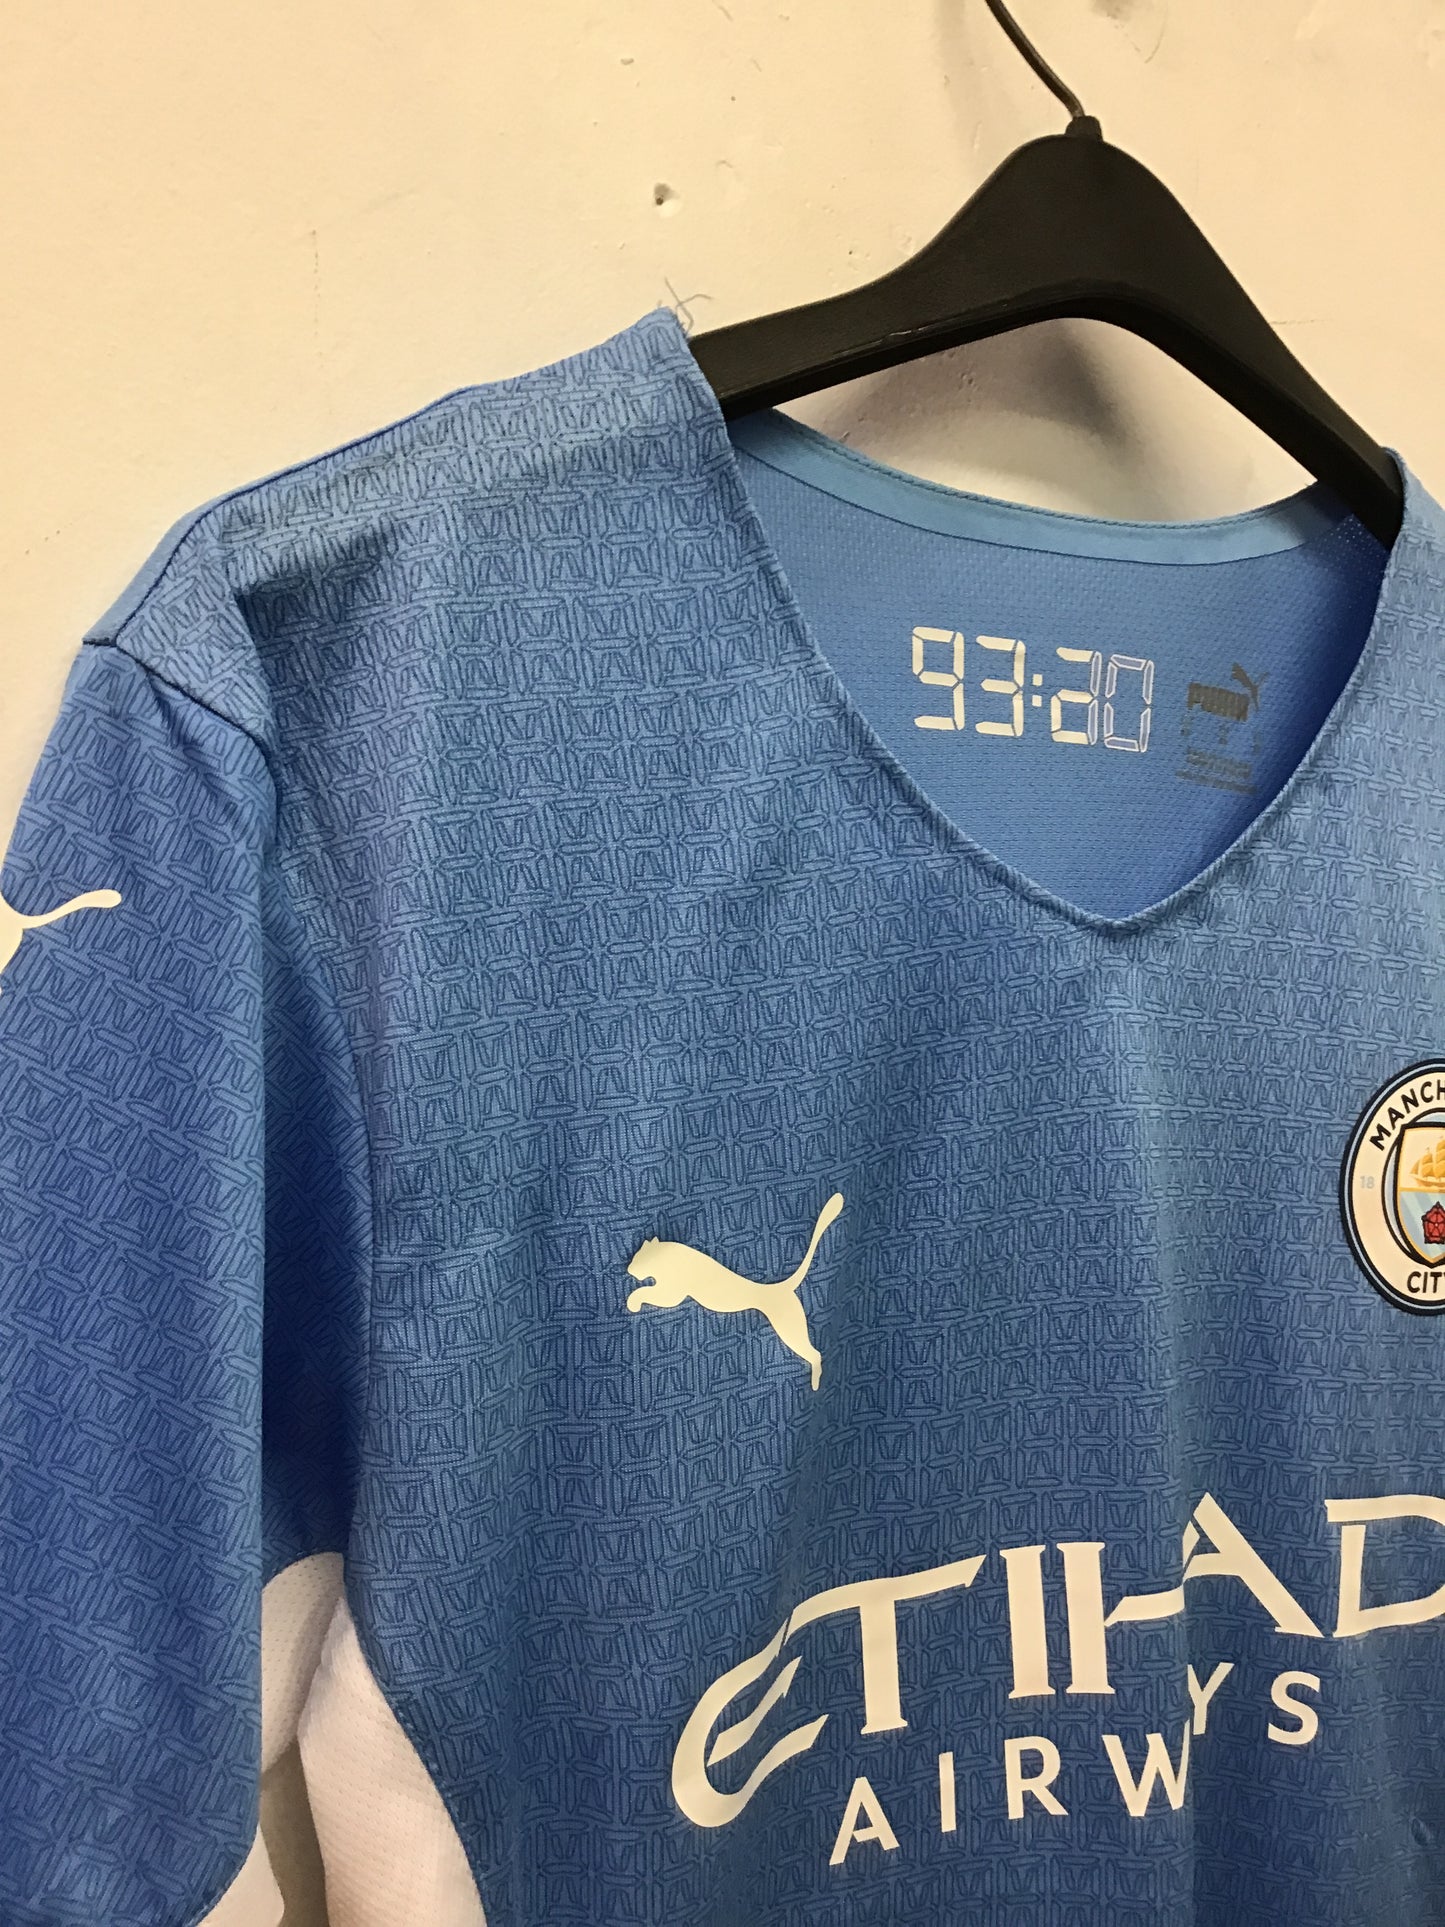 Puma Manchester City 93:20 Authentic Jersey, Size M